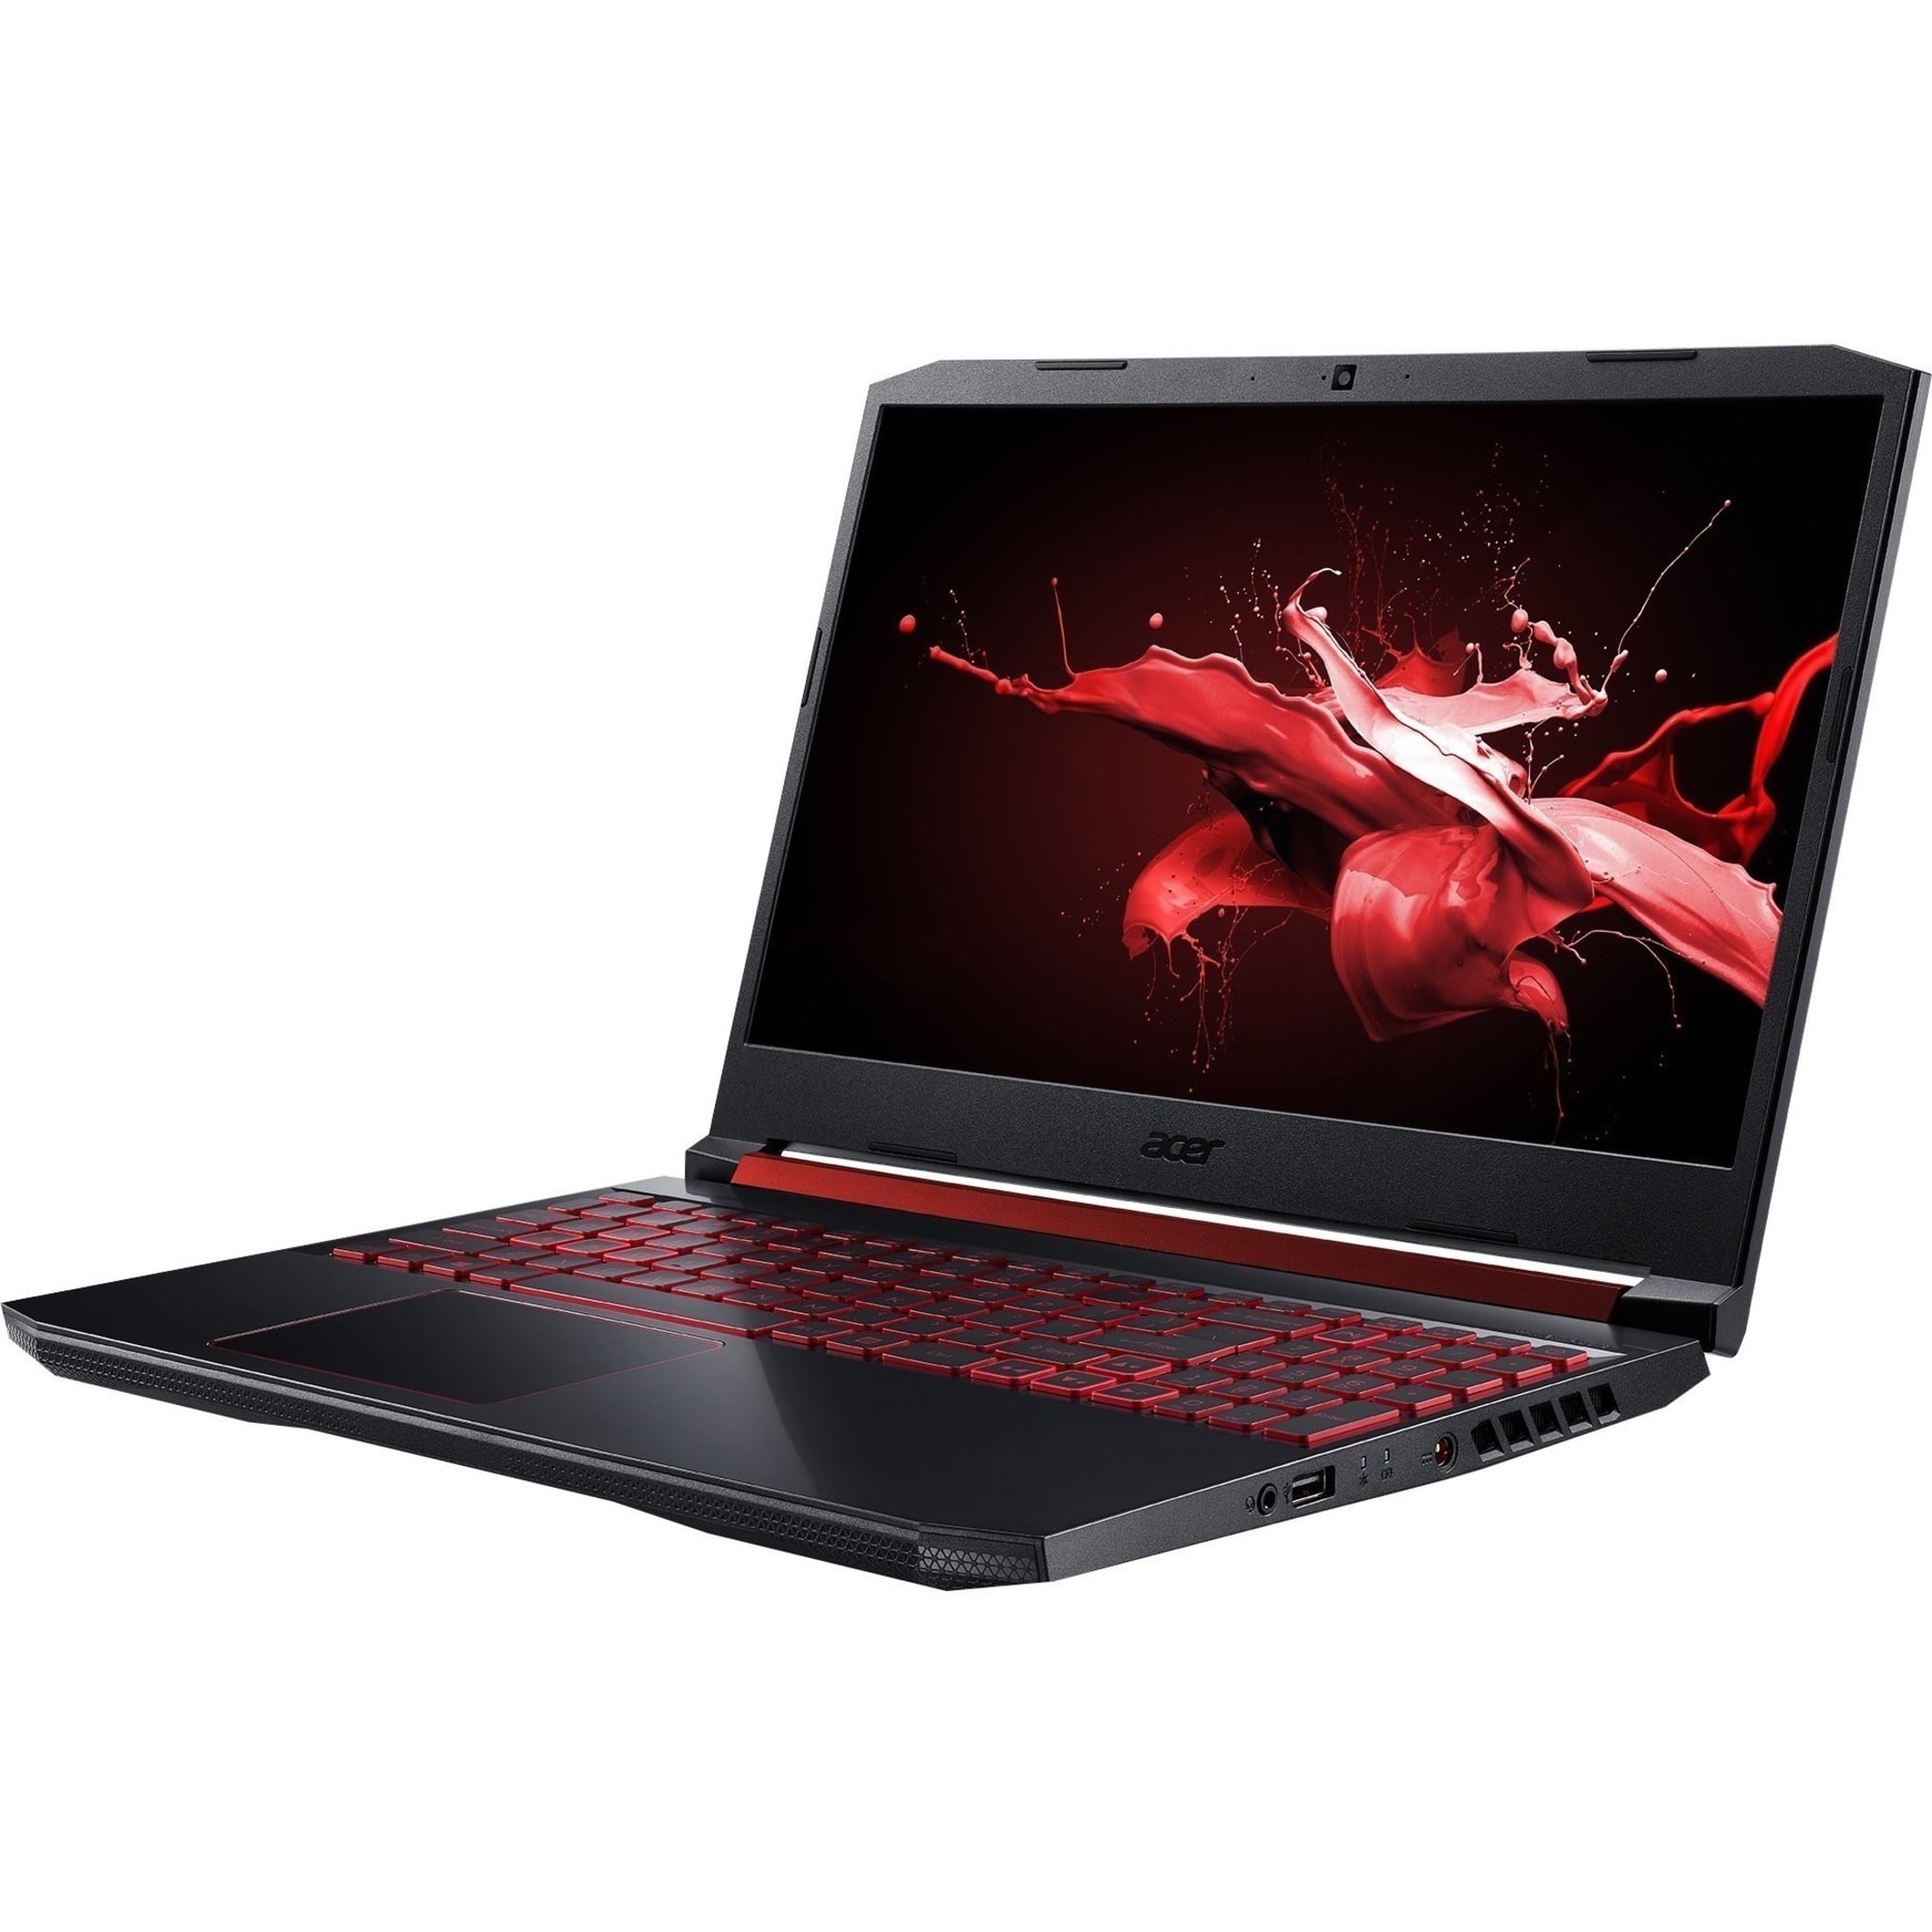 Acer Nitro 5 Full HD Gaming Laptop, Intel Core i5-9300H, NVIDIA GTX 1650 4 GB, 256GB SSD, Windows 10 Home, AN515-54-5812 - Walmart.com